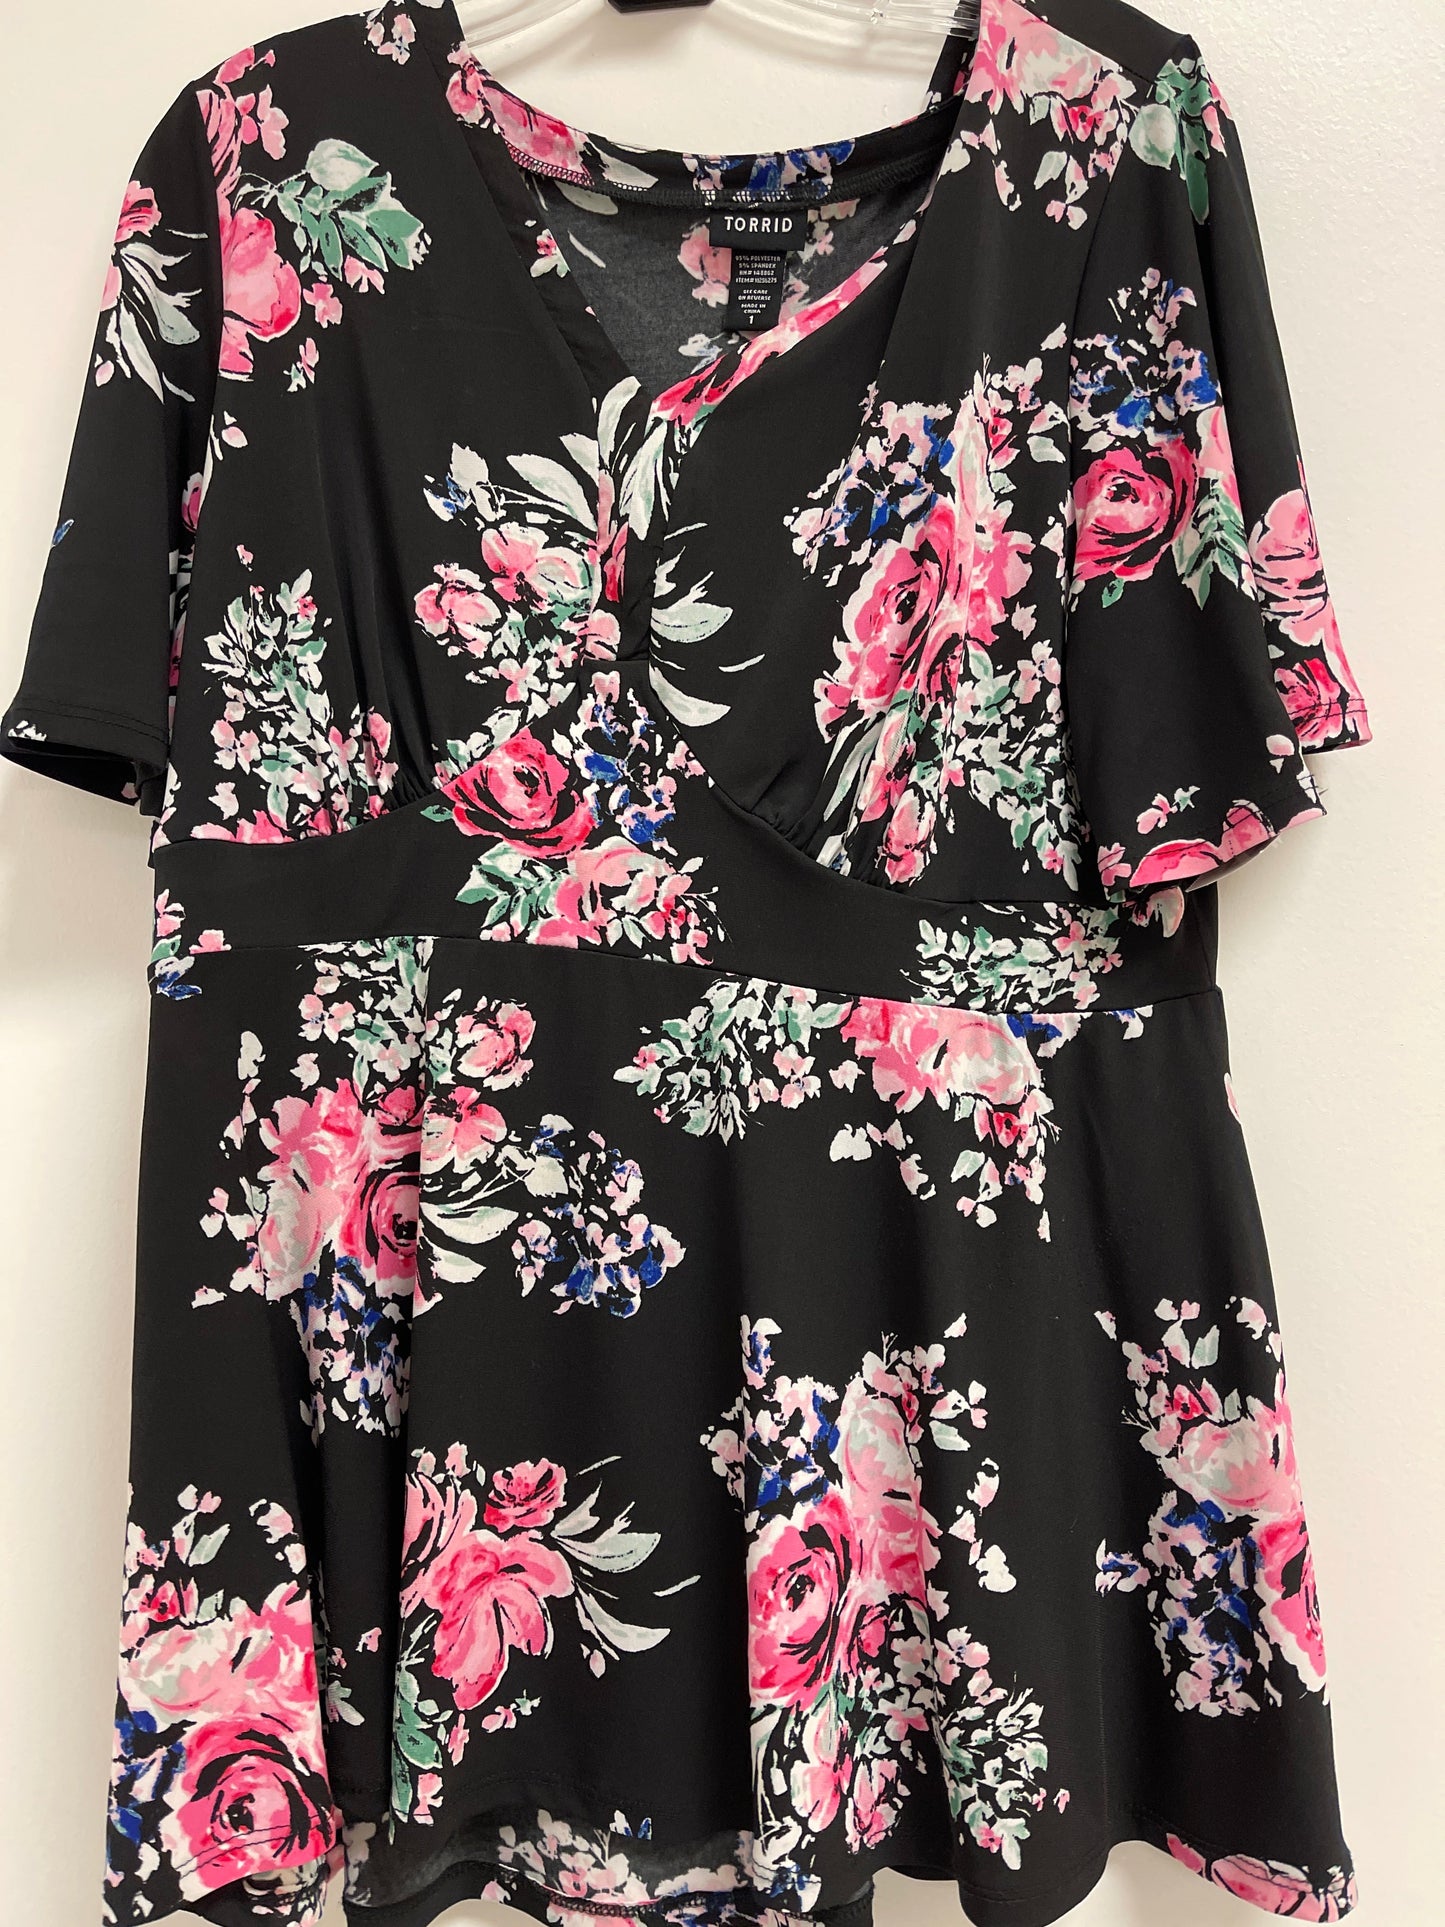 Floral Print Top Short Sleeve Torrid, Size 1x